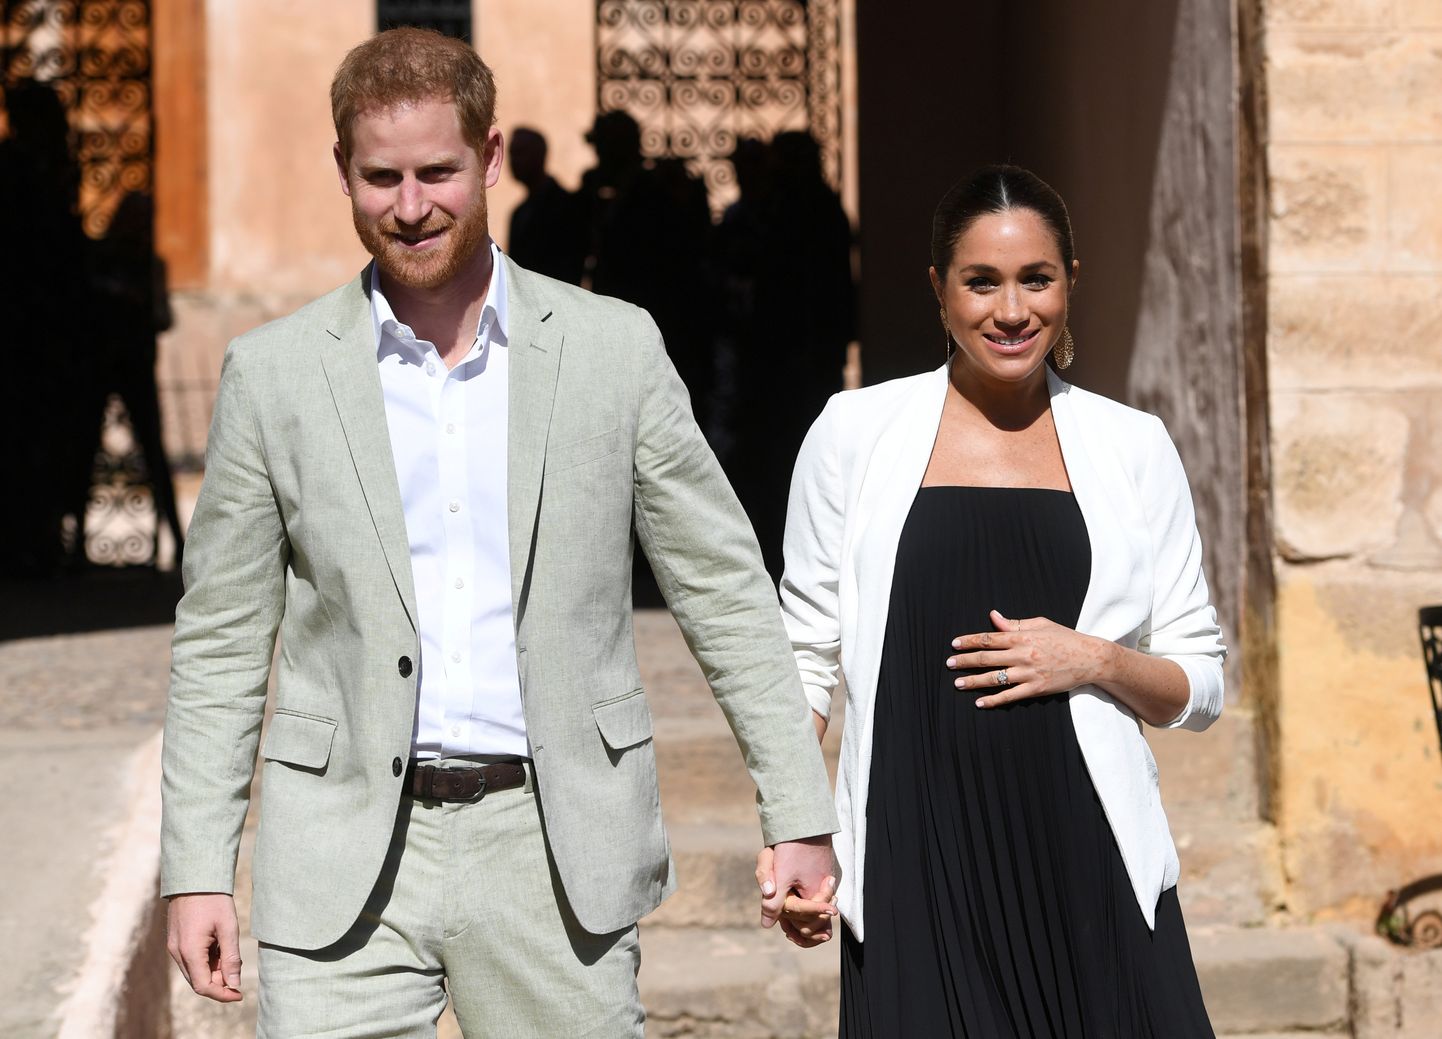 Prints Harry ja Sussexi hertsoginna Meghan 2019. aasta veebruaris Marokos